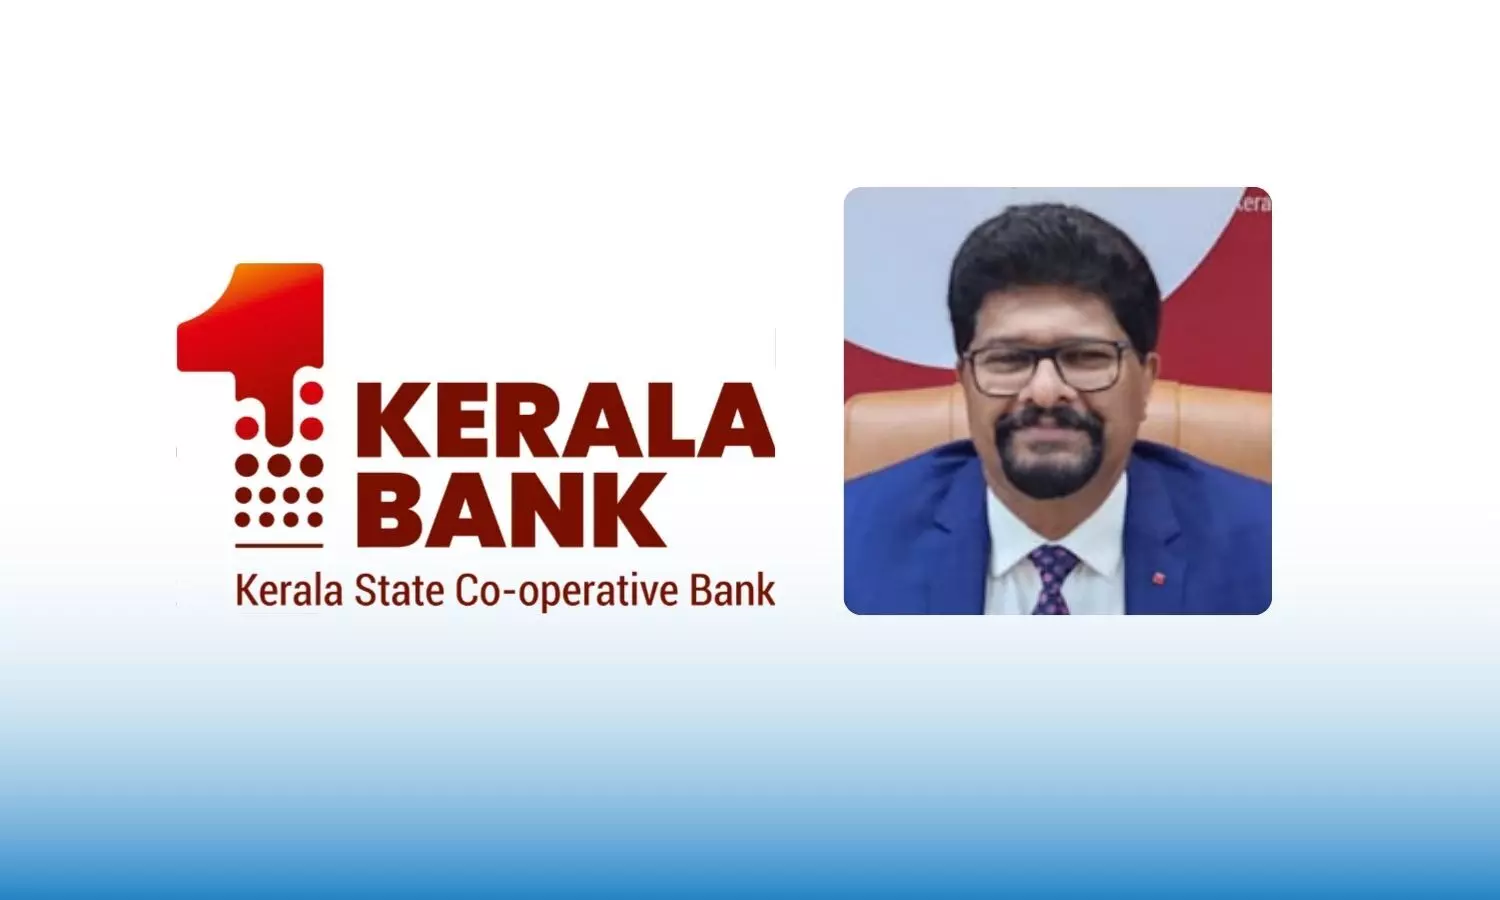 Kerala Bank logo, Jorty M Chacko